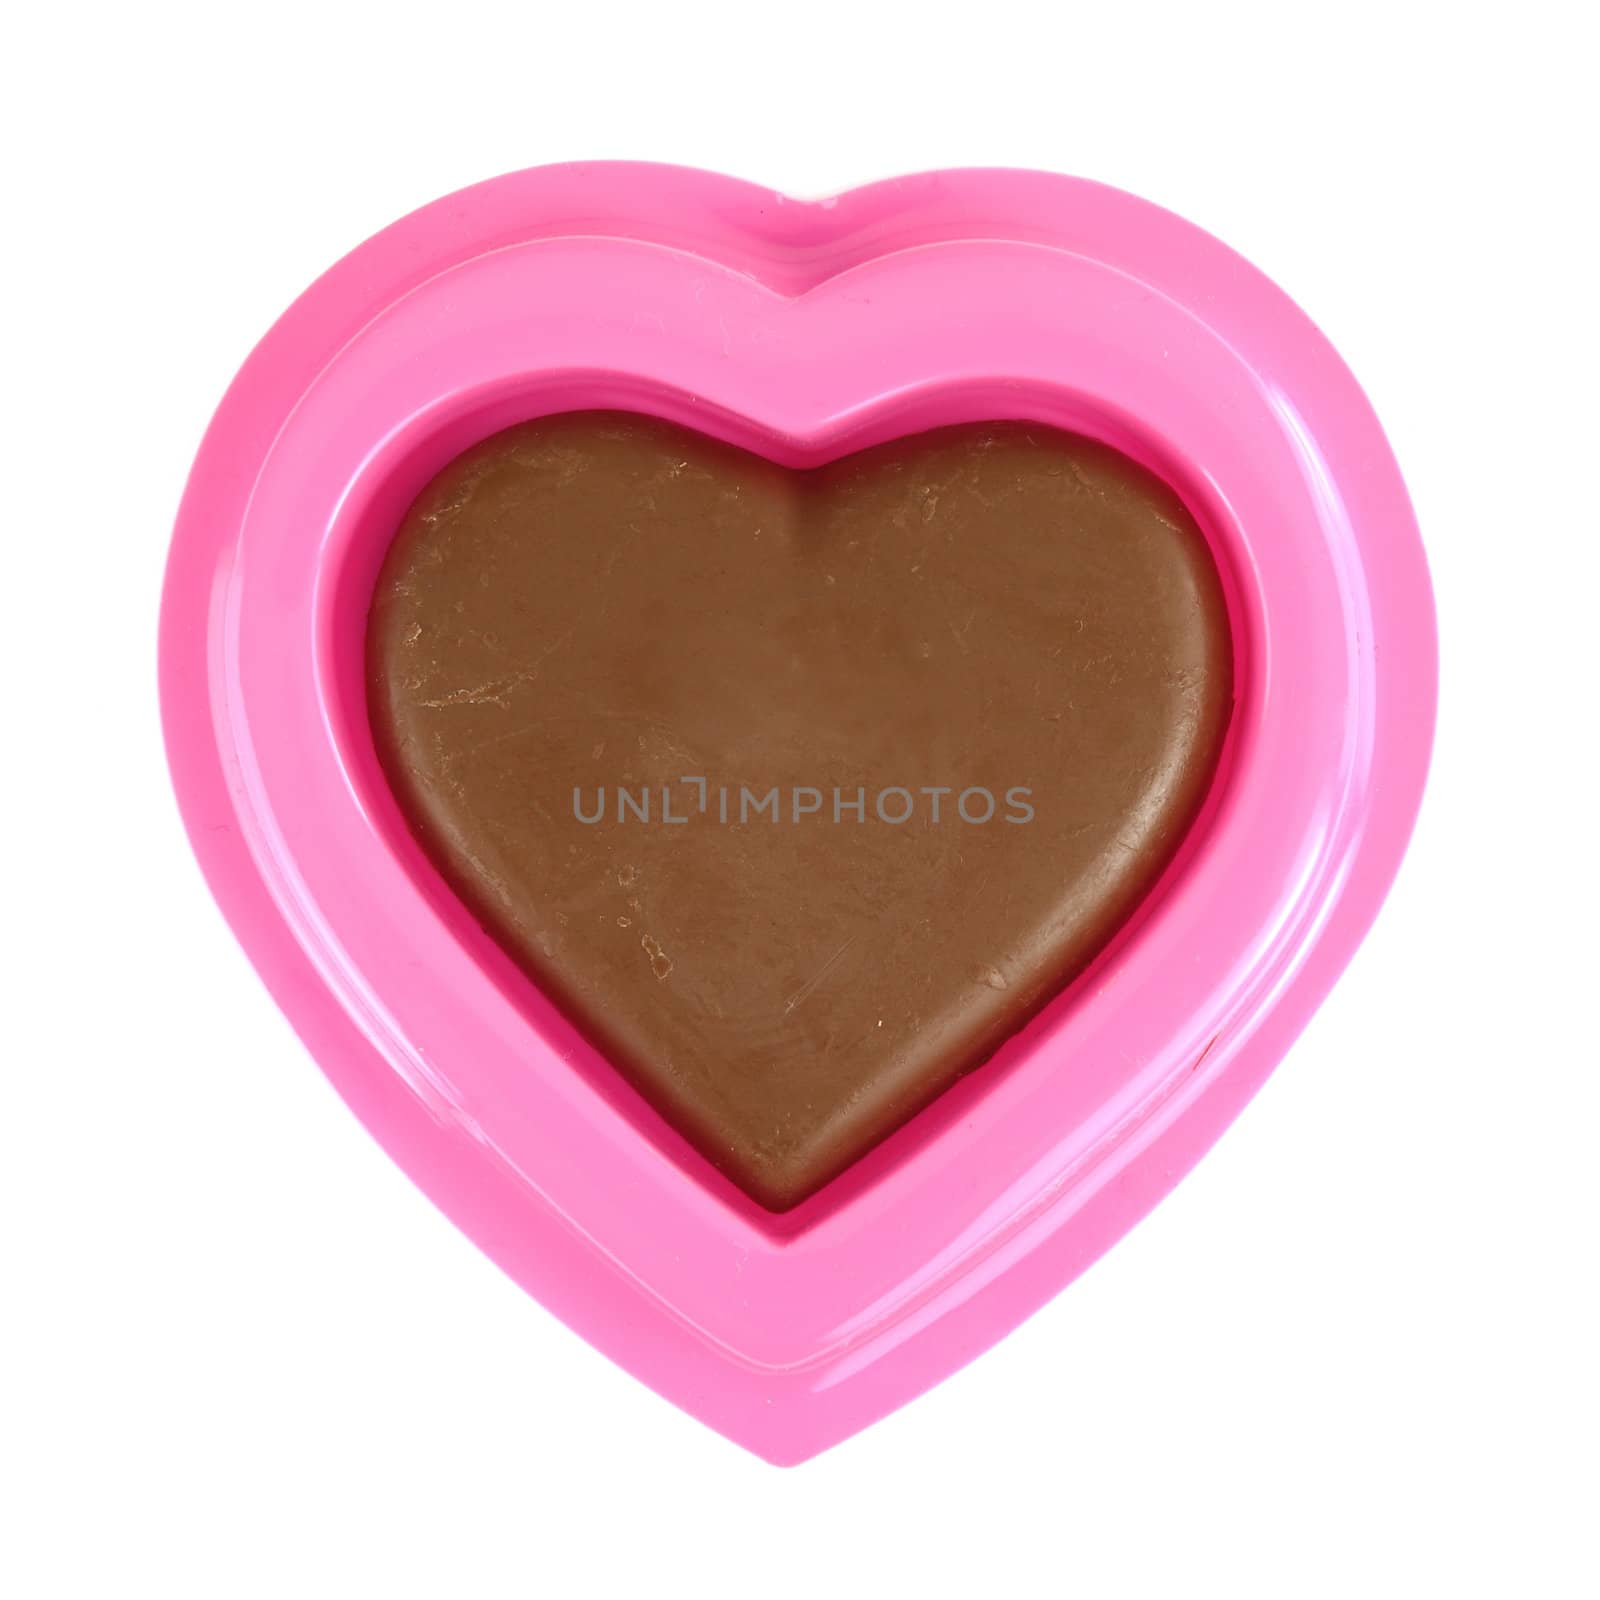 chocolate heart shape on white background